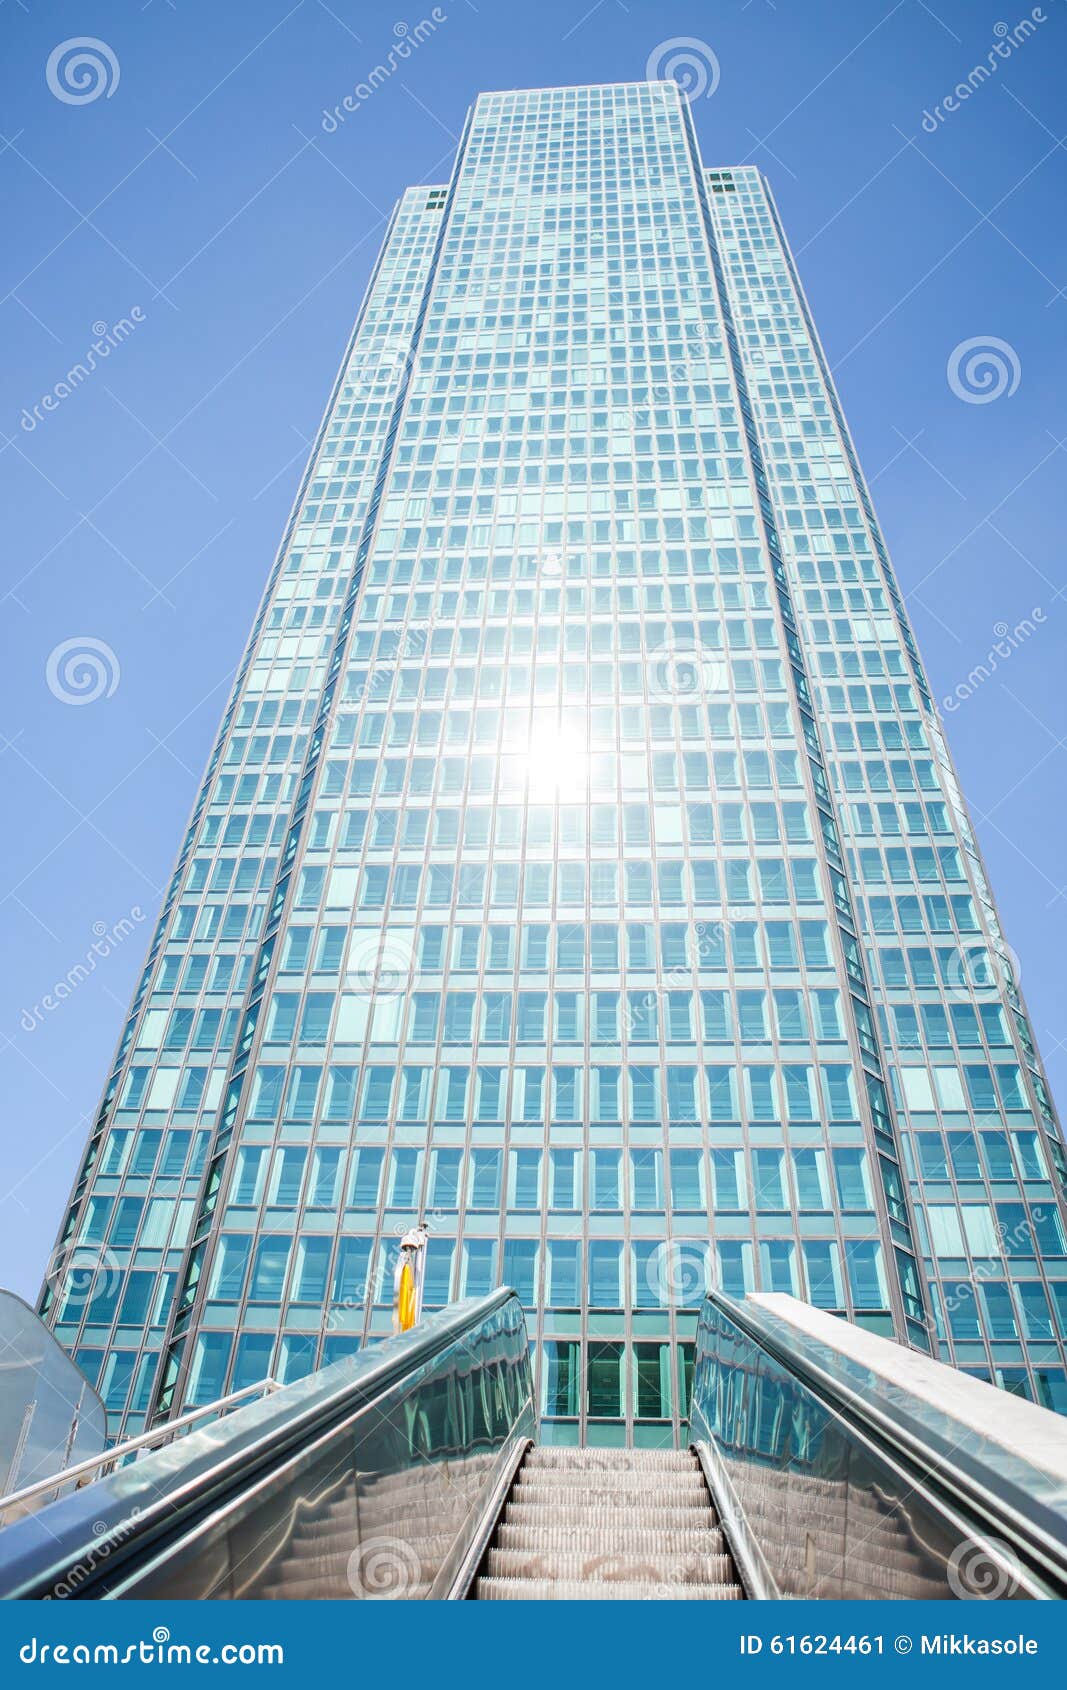 business-office-glass-building-background-daylight-sunshine-61624461.jpg